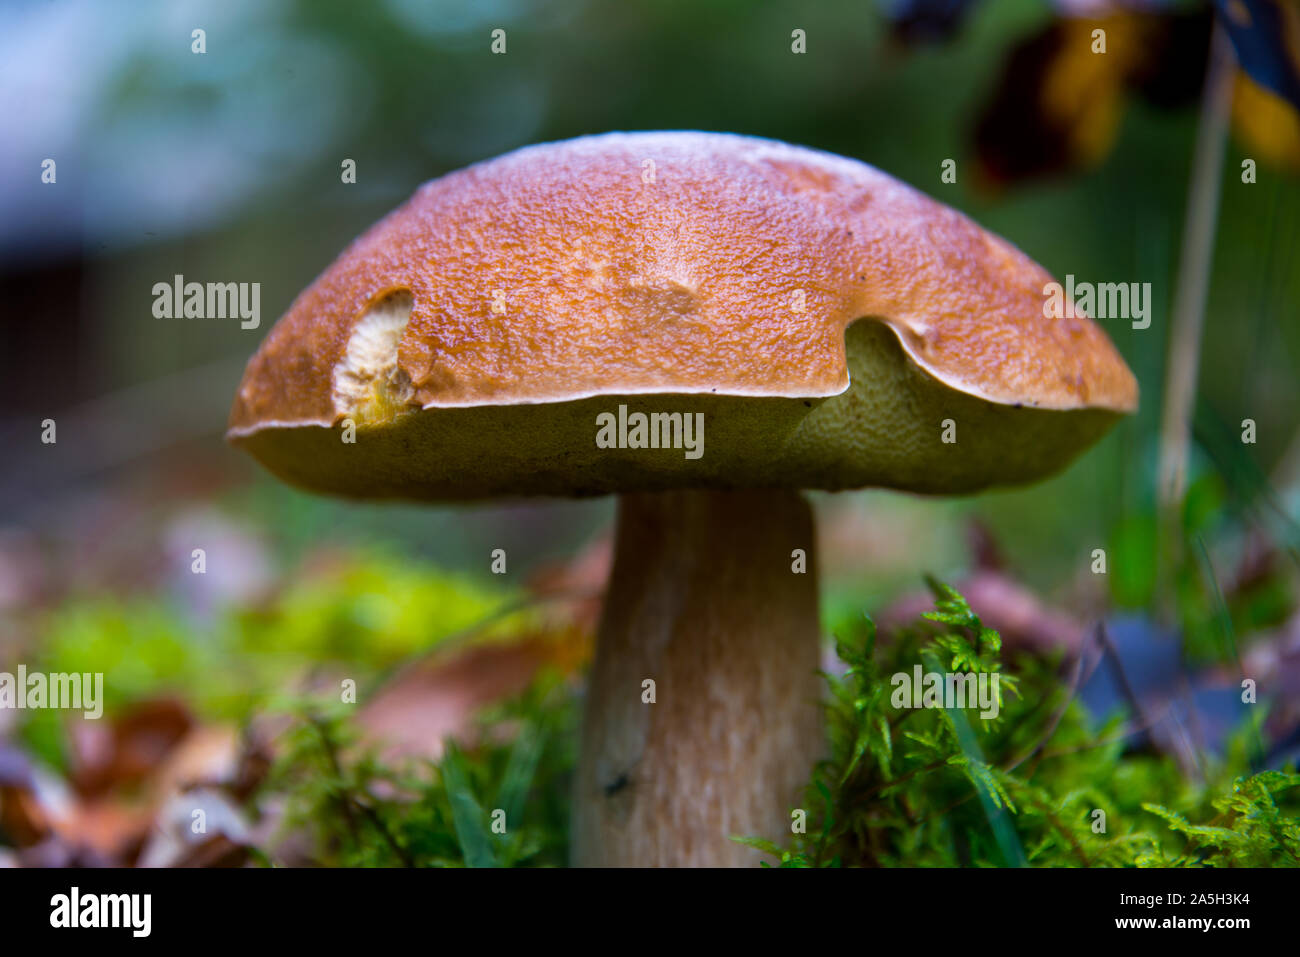 big wild bay boletus waiting for mushroom pickers in autumnal brandenburg forest, germany Stock Photo